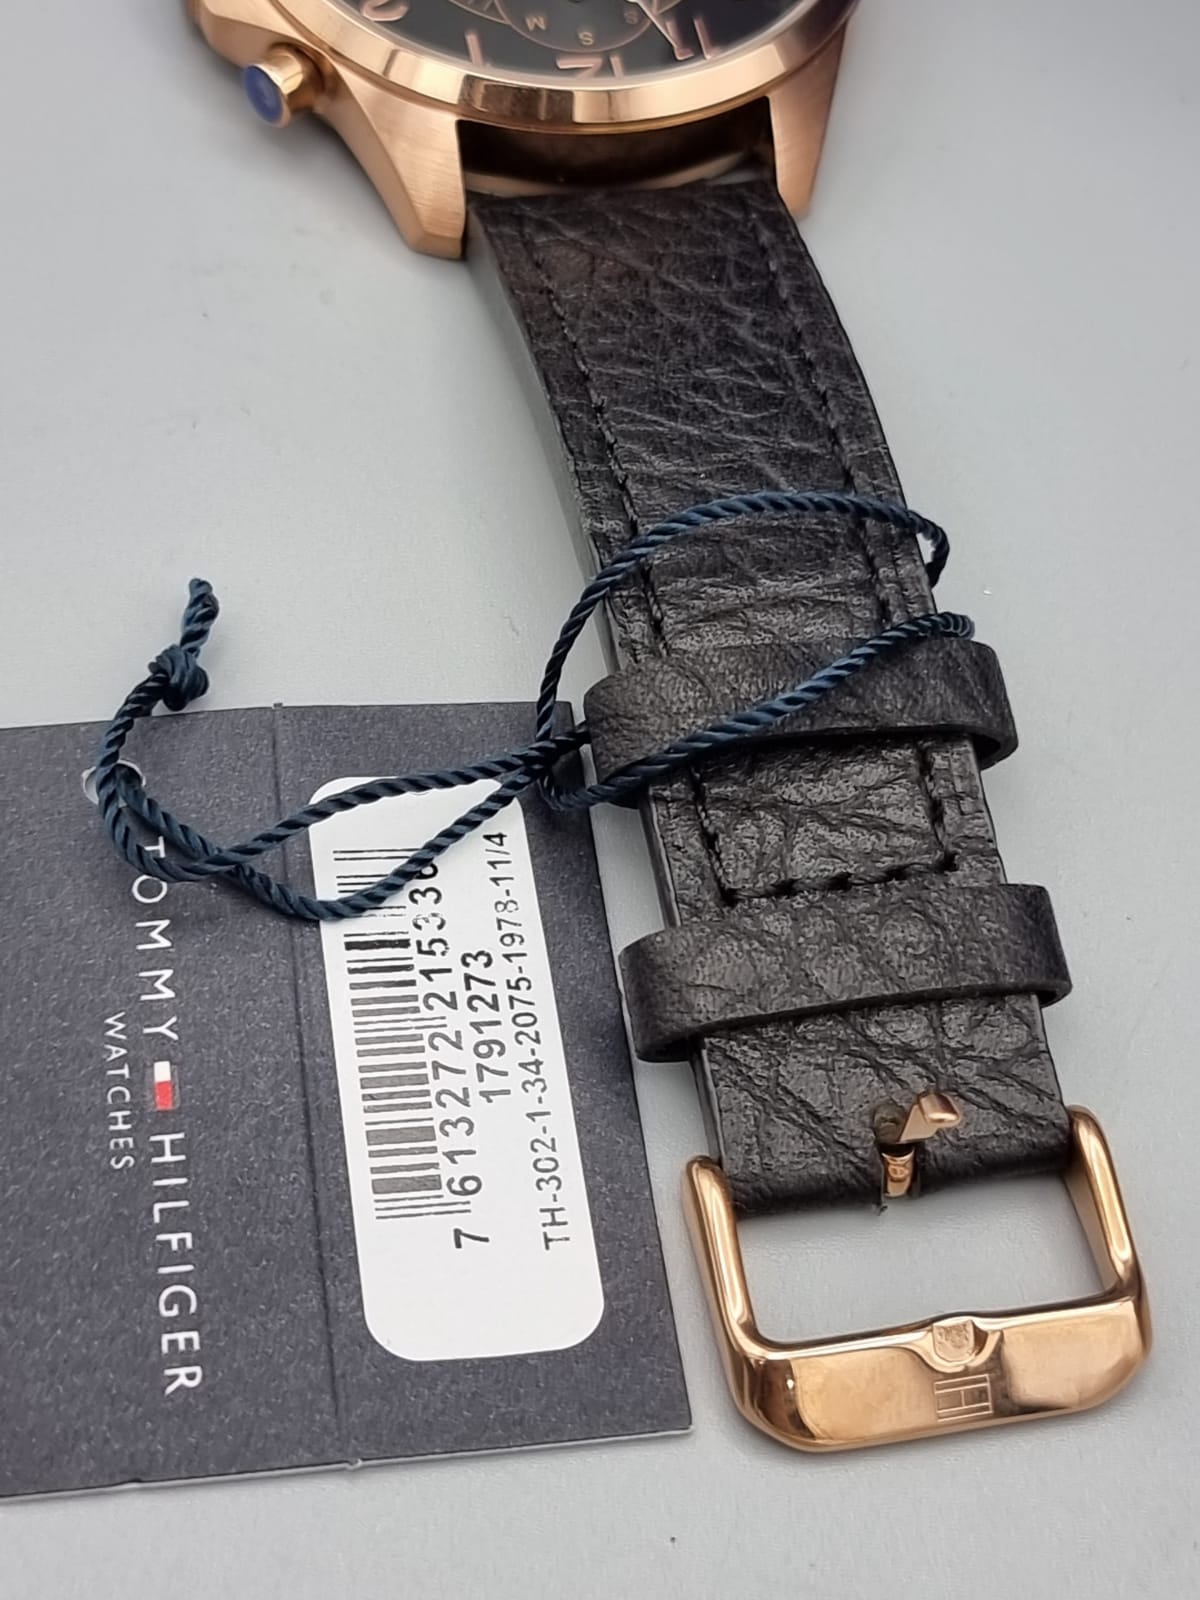 Tommy Hilfiger Men's Quartz Gold and Leather Watch, (Model: 1791273)